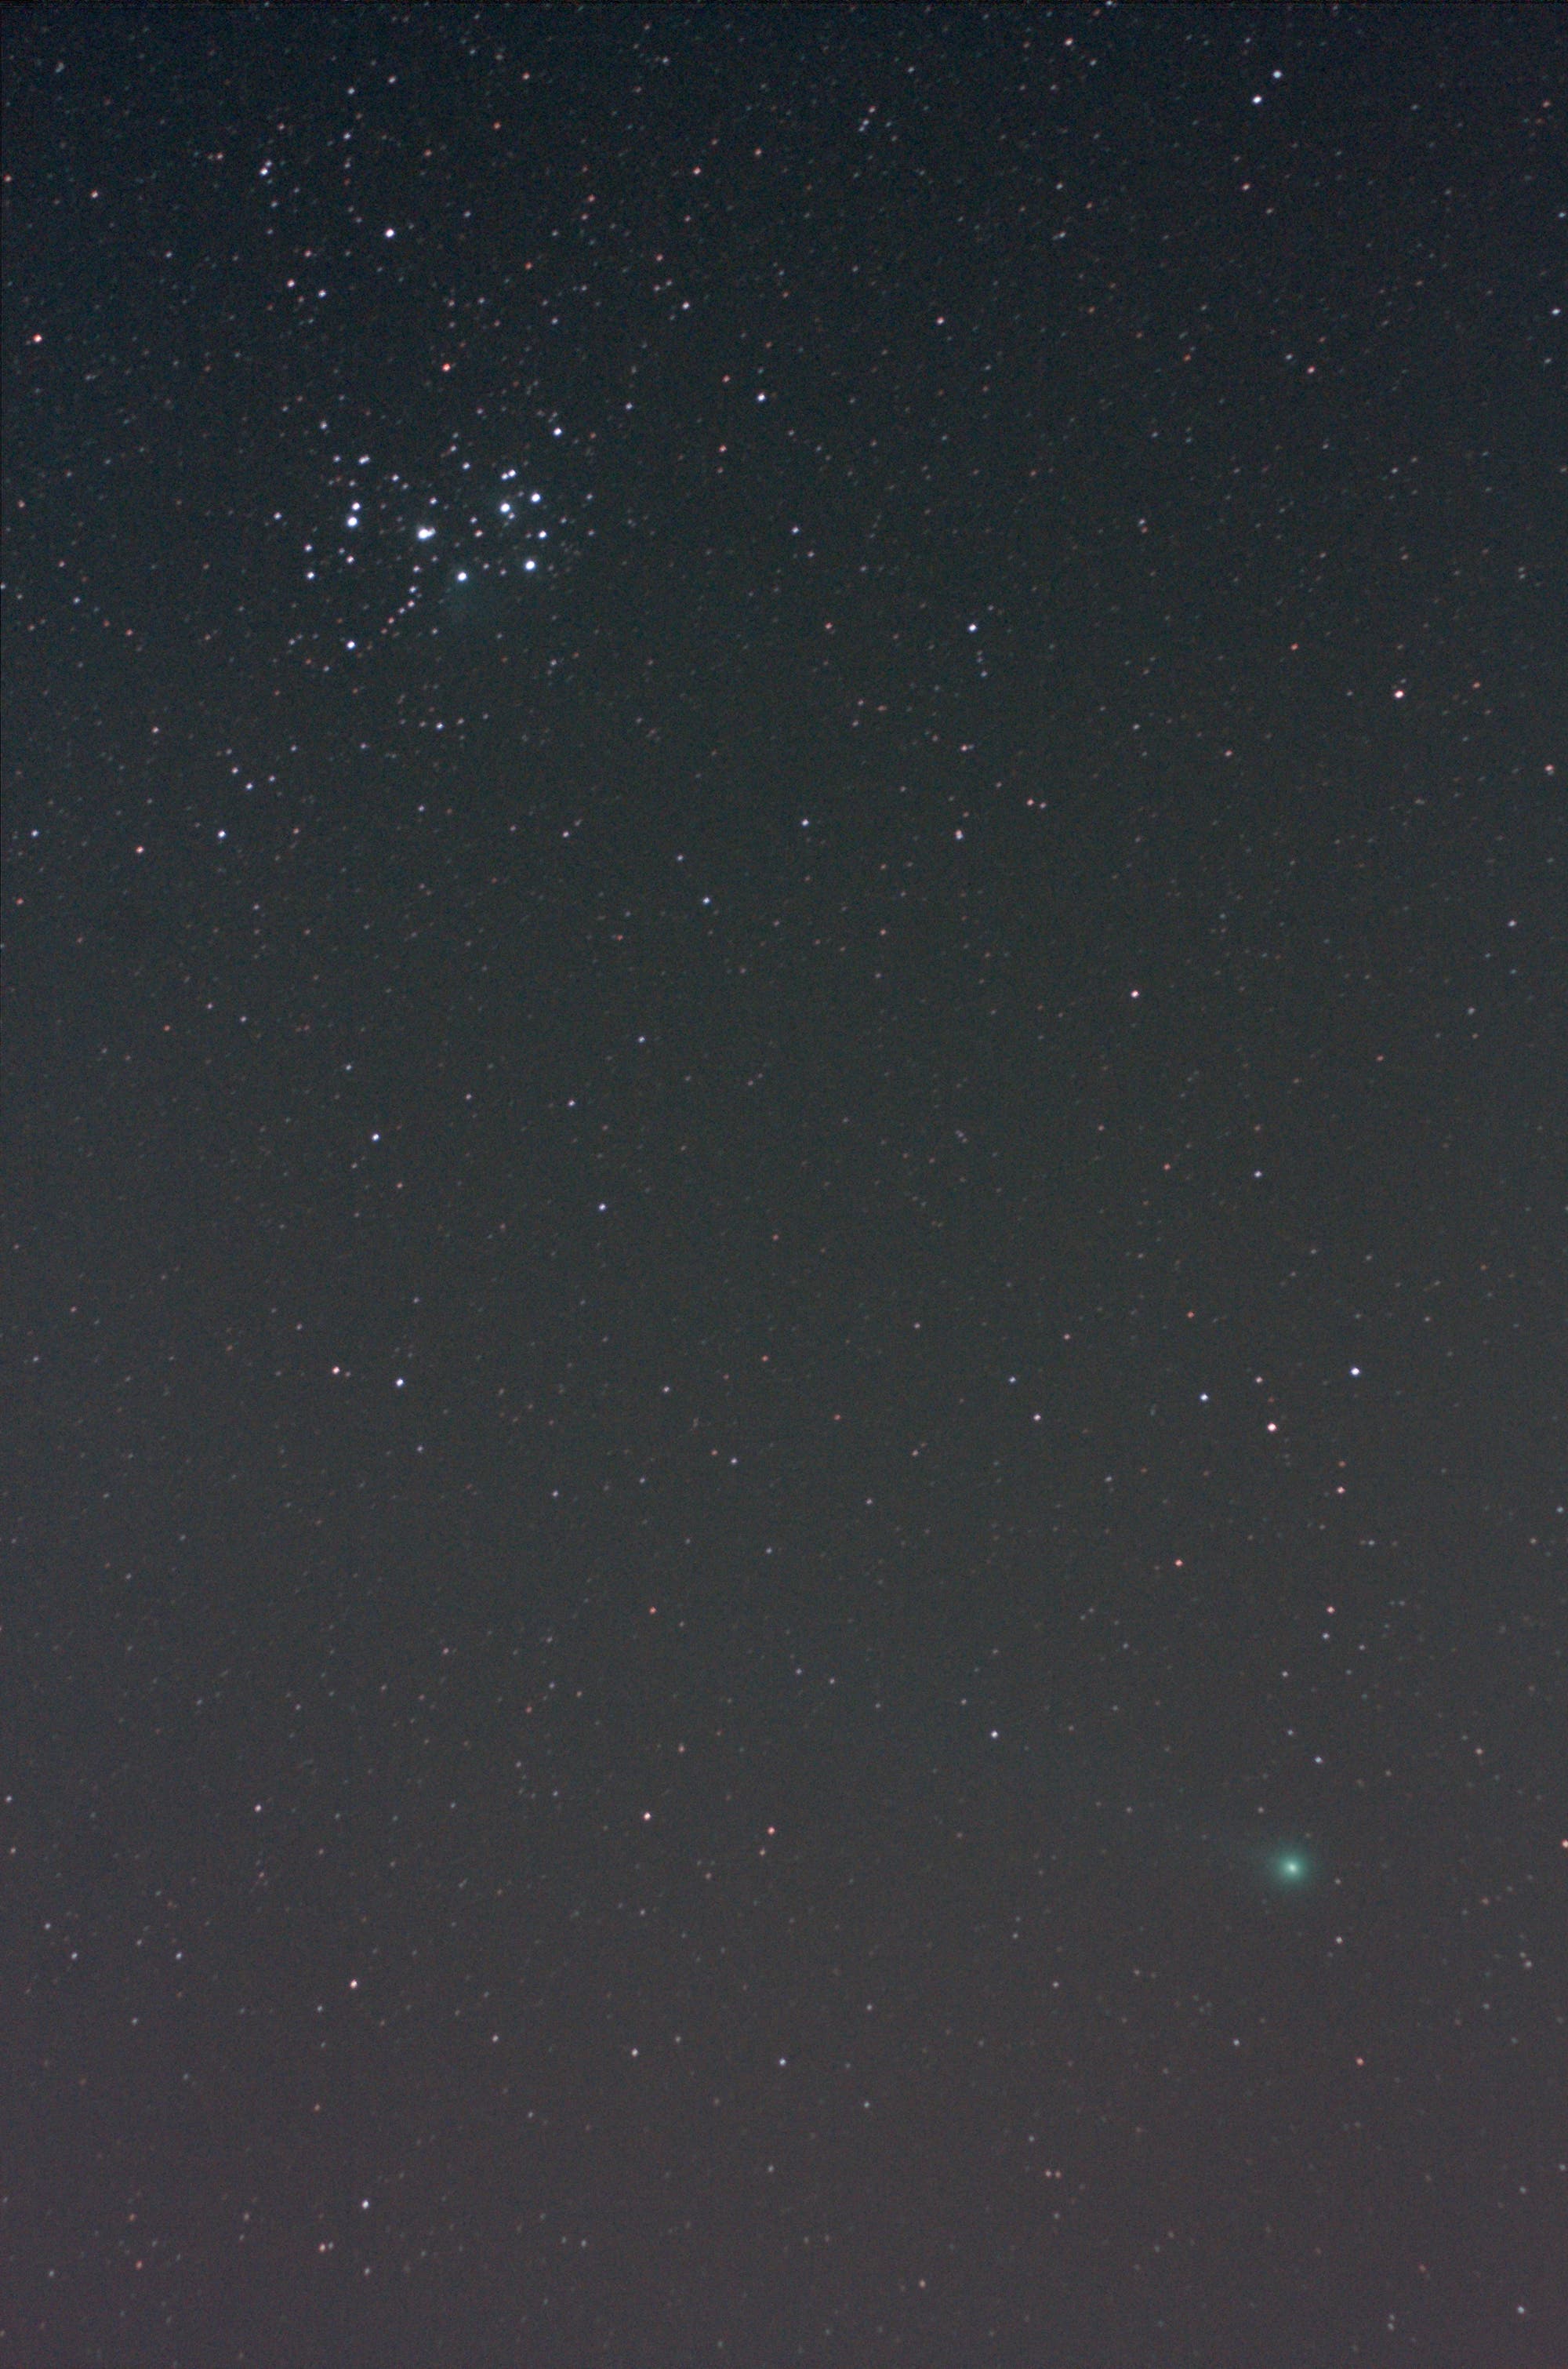 Komet C/2014 Q2 Lovejoy und Plejaden (M 45)